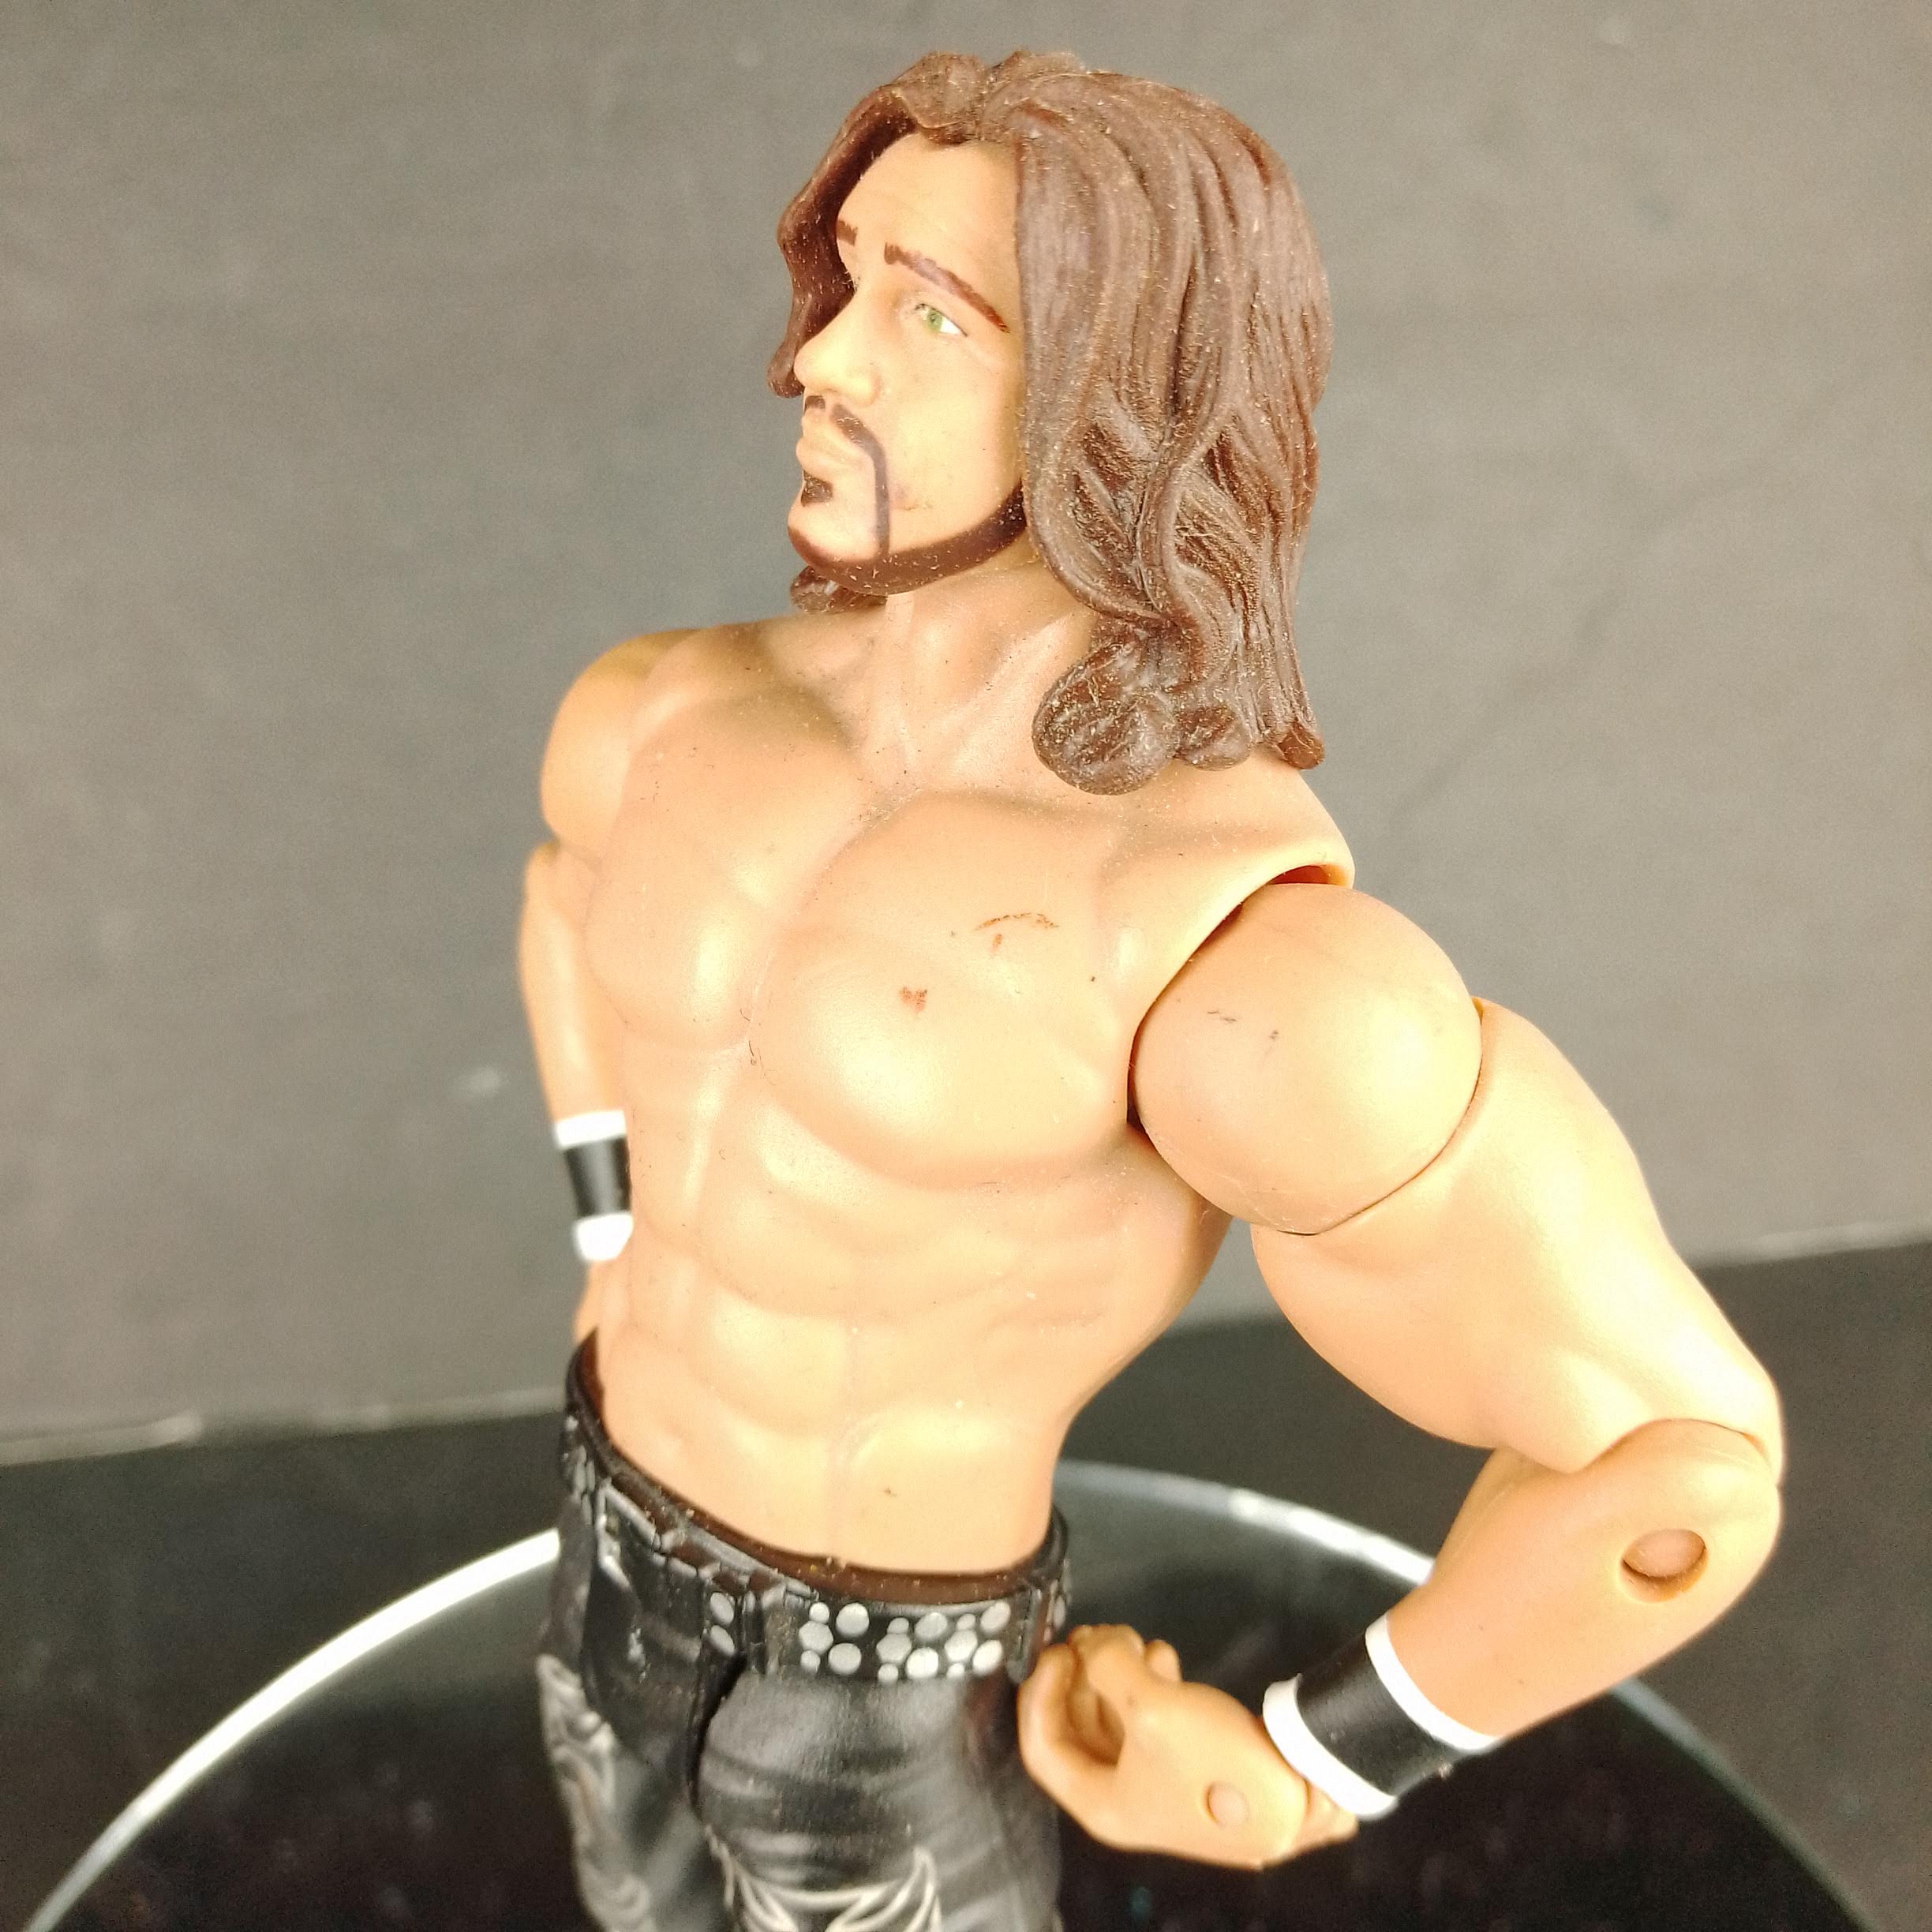 2011 WWE John Morrison Mattel Wrestling Action Figure for sale closeup 2